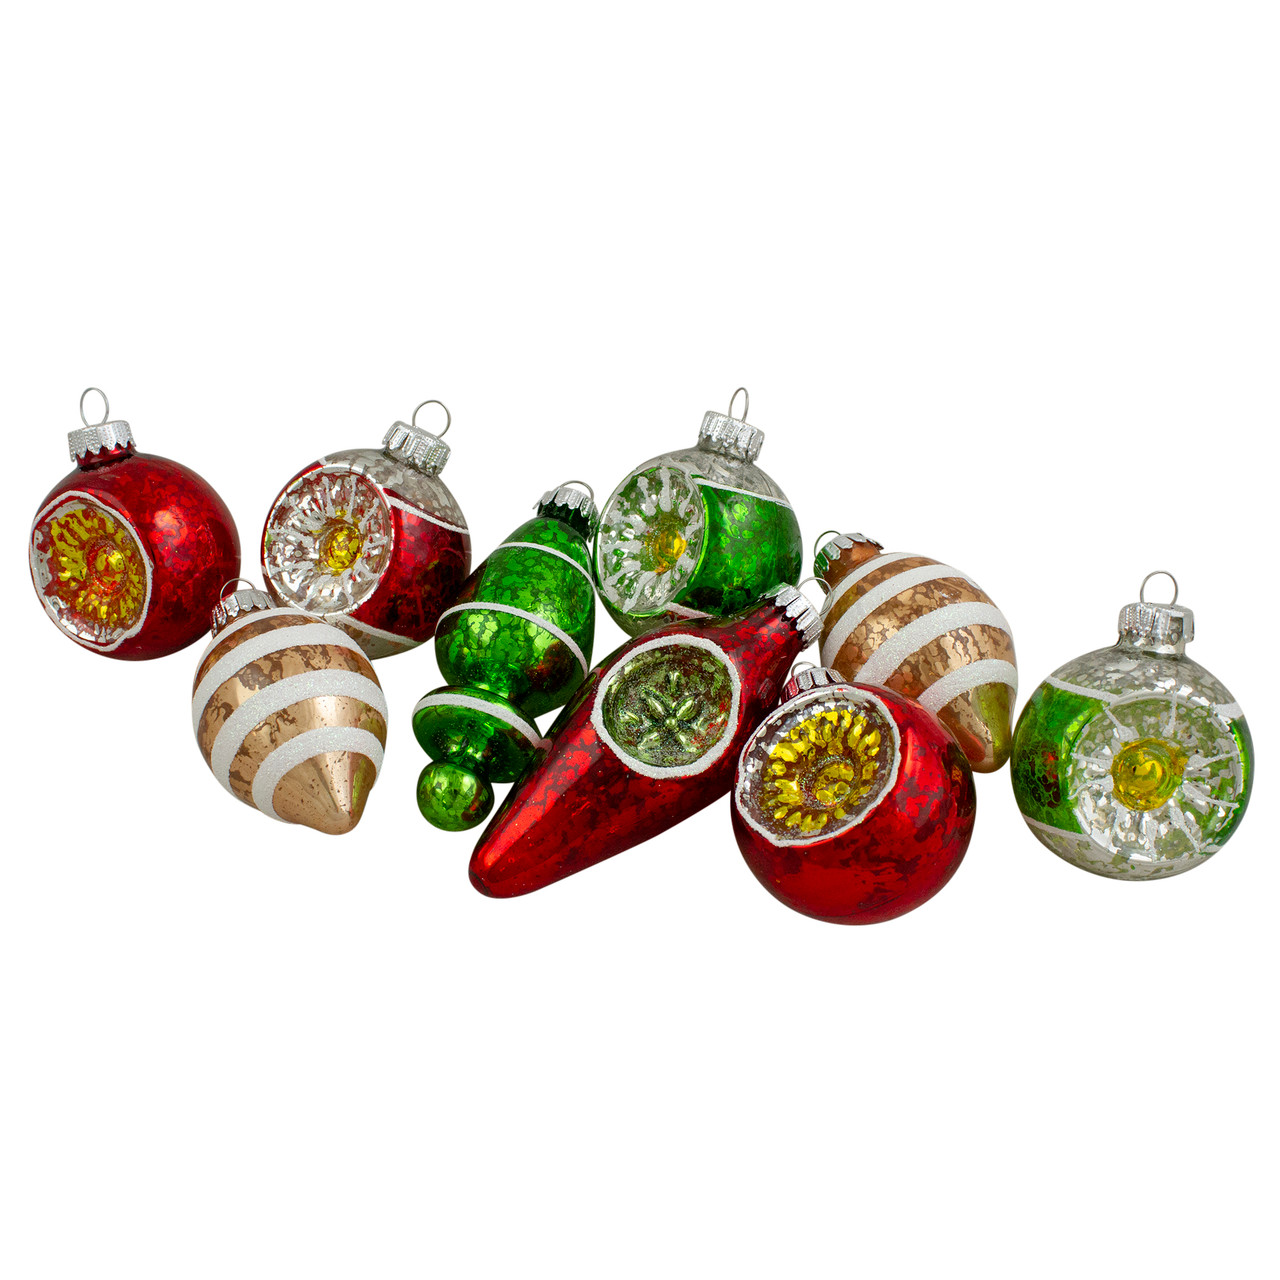 Shiny Glass Hearts Valentine's Day Ornaments - Set of 12, Holiday Mini Tree  Home Decorations 